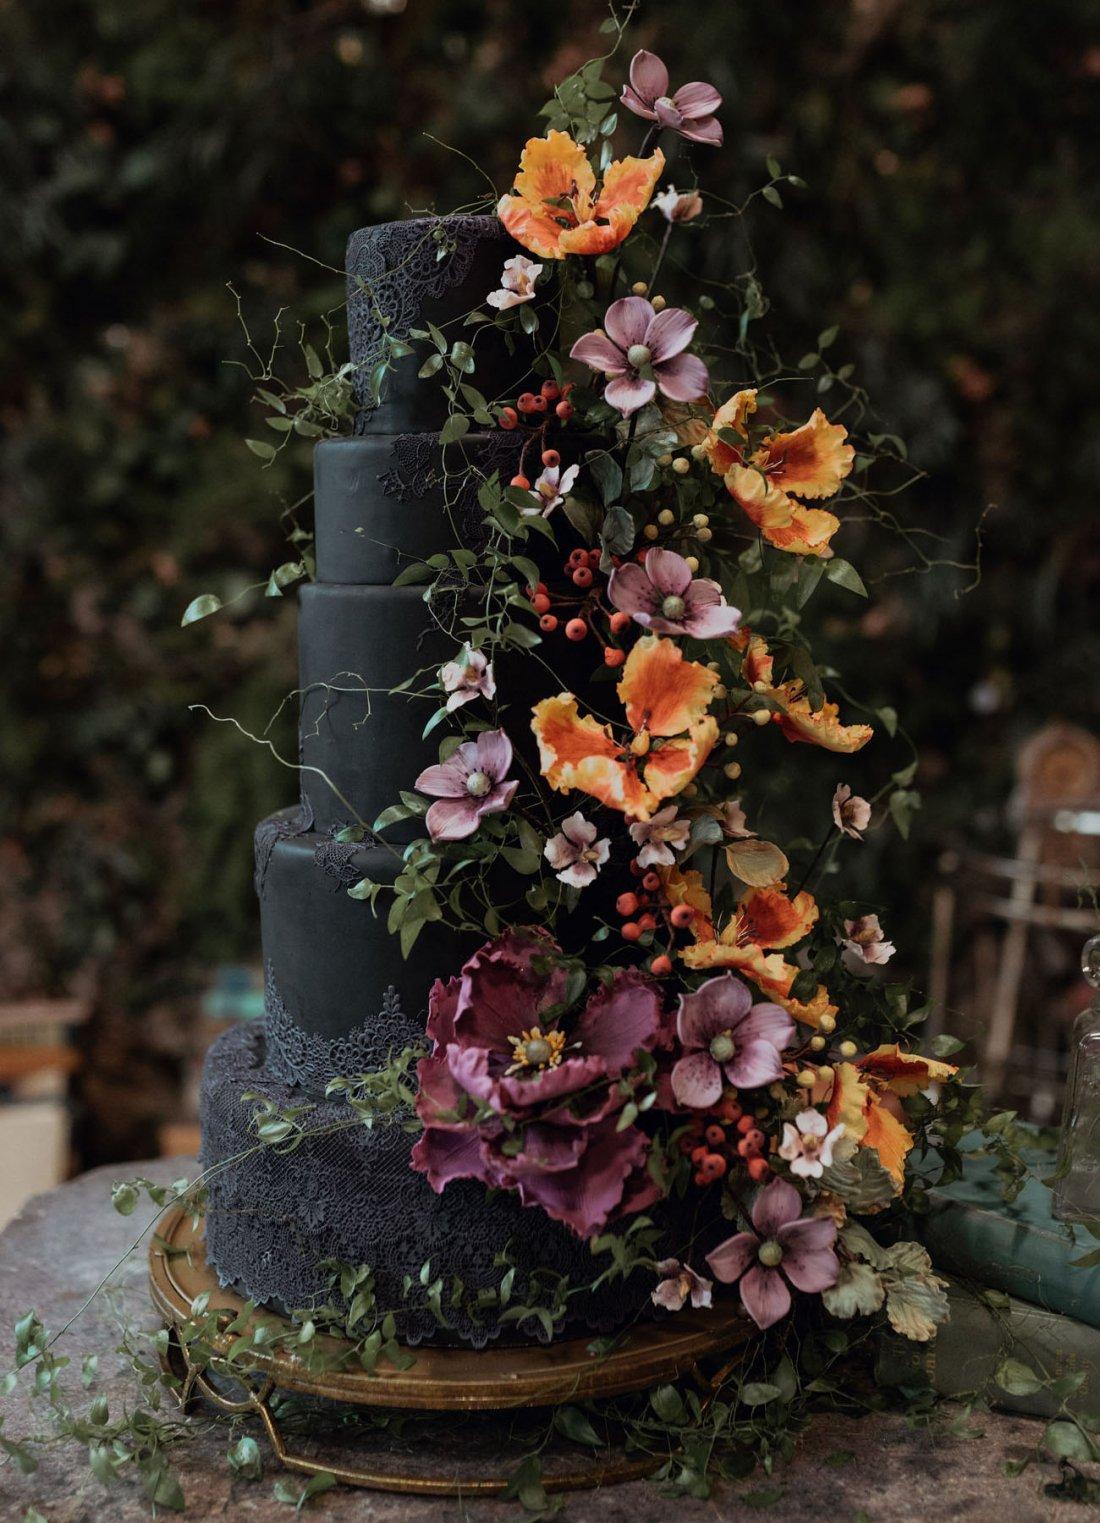 25 Outdoor Wedding Cake Ideas for the Outdoorsy Couple